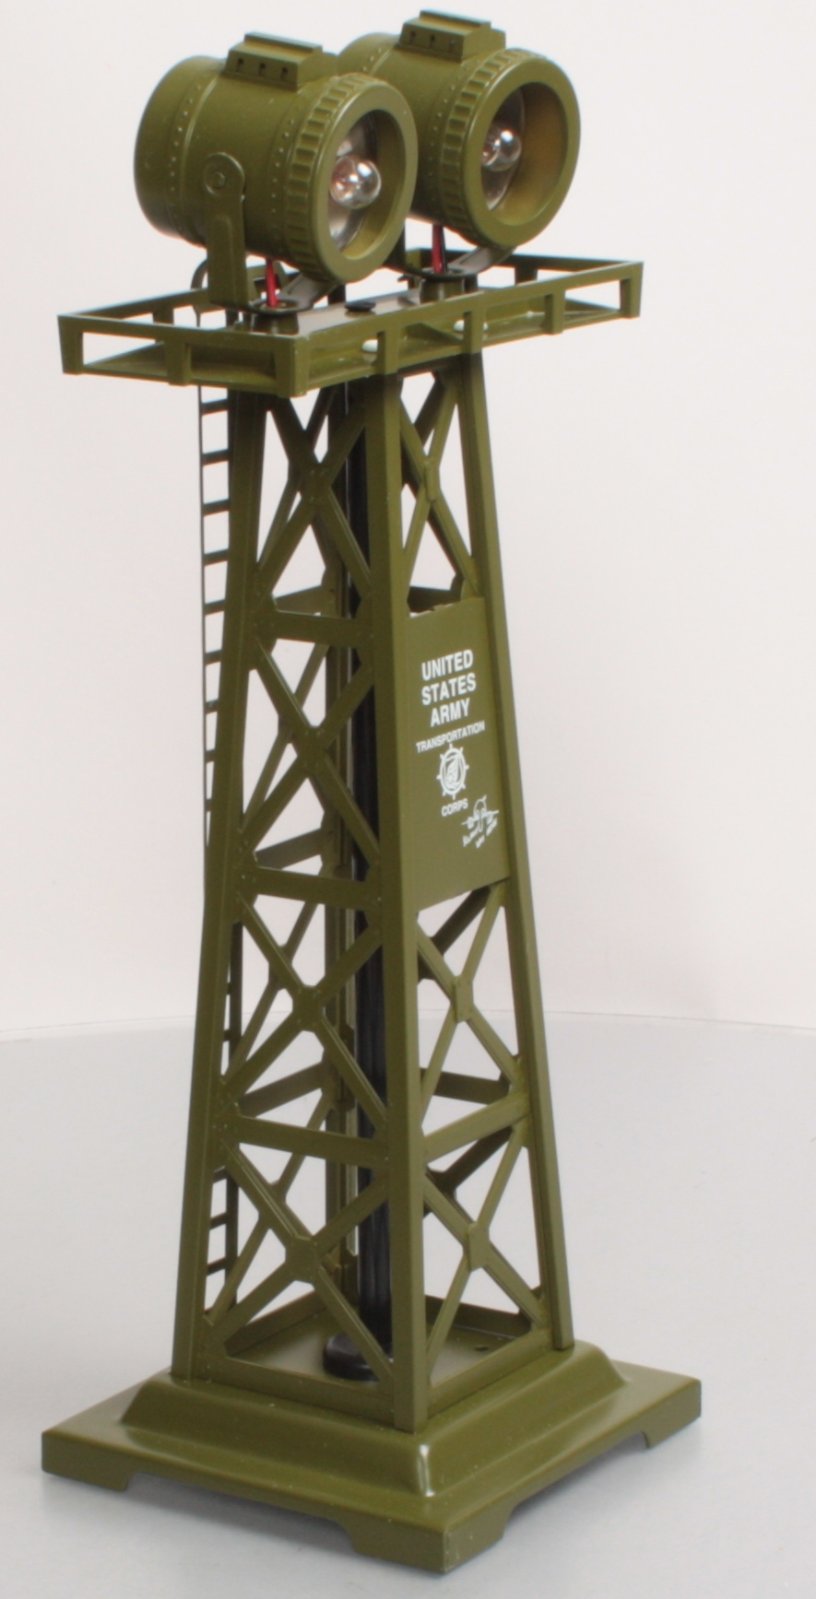 O-Line 703 US Army Rail Yard Dual Light Tower